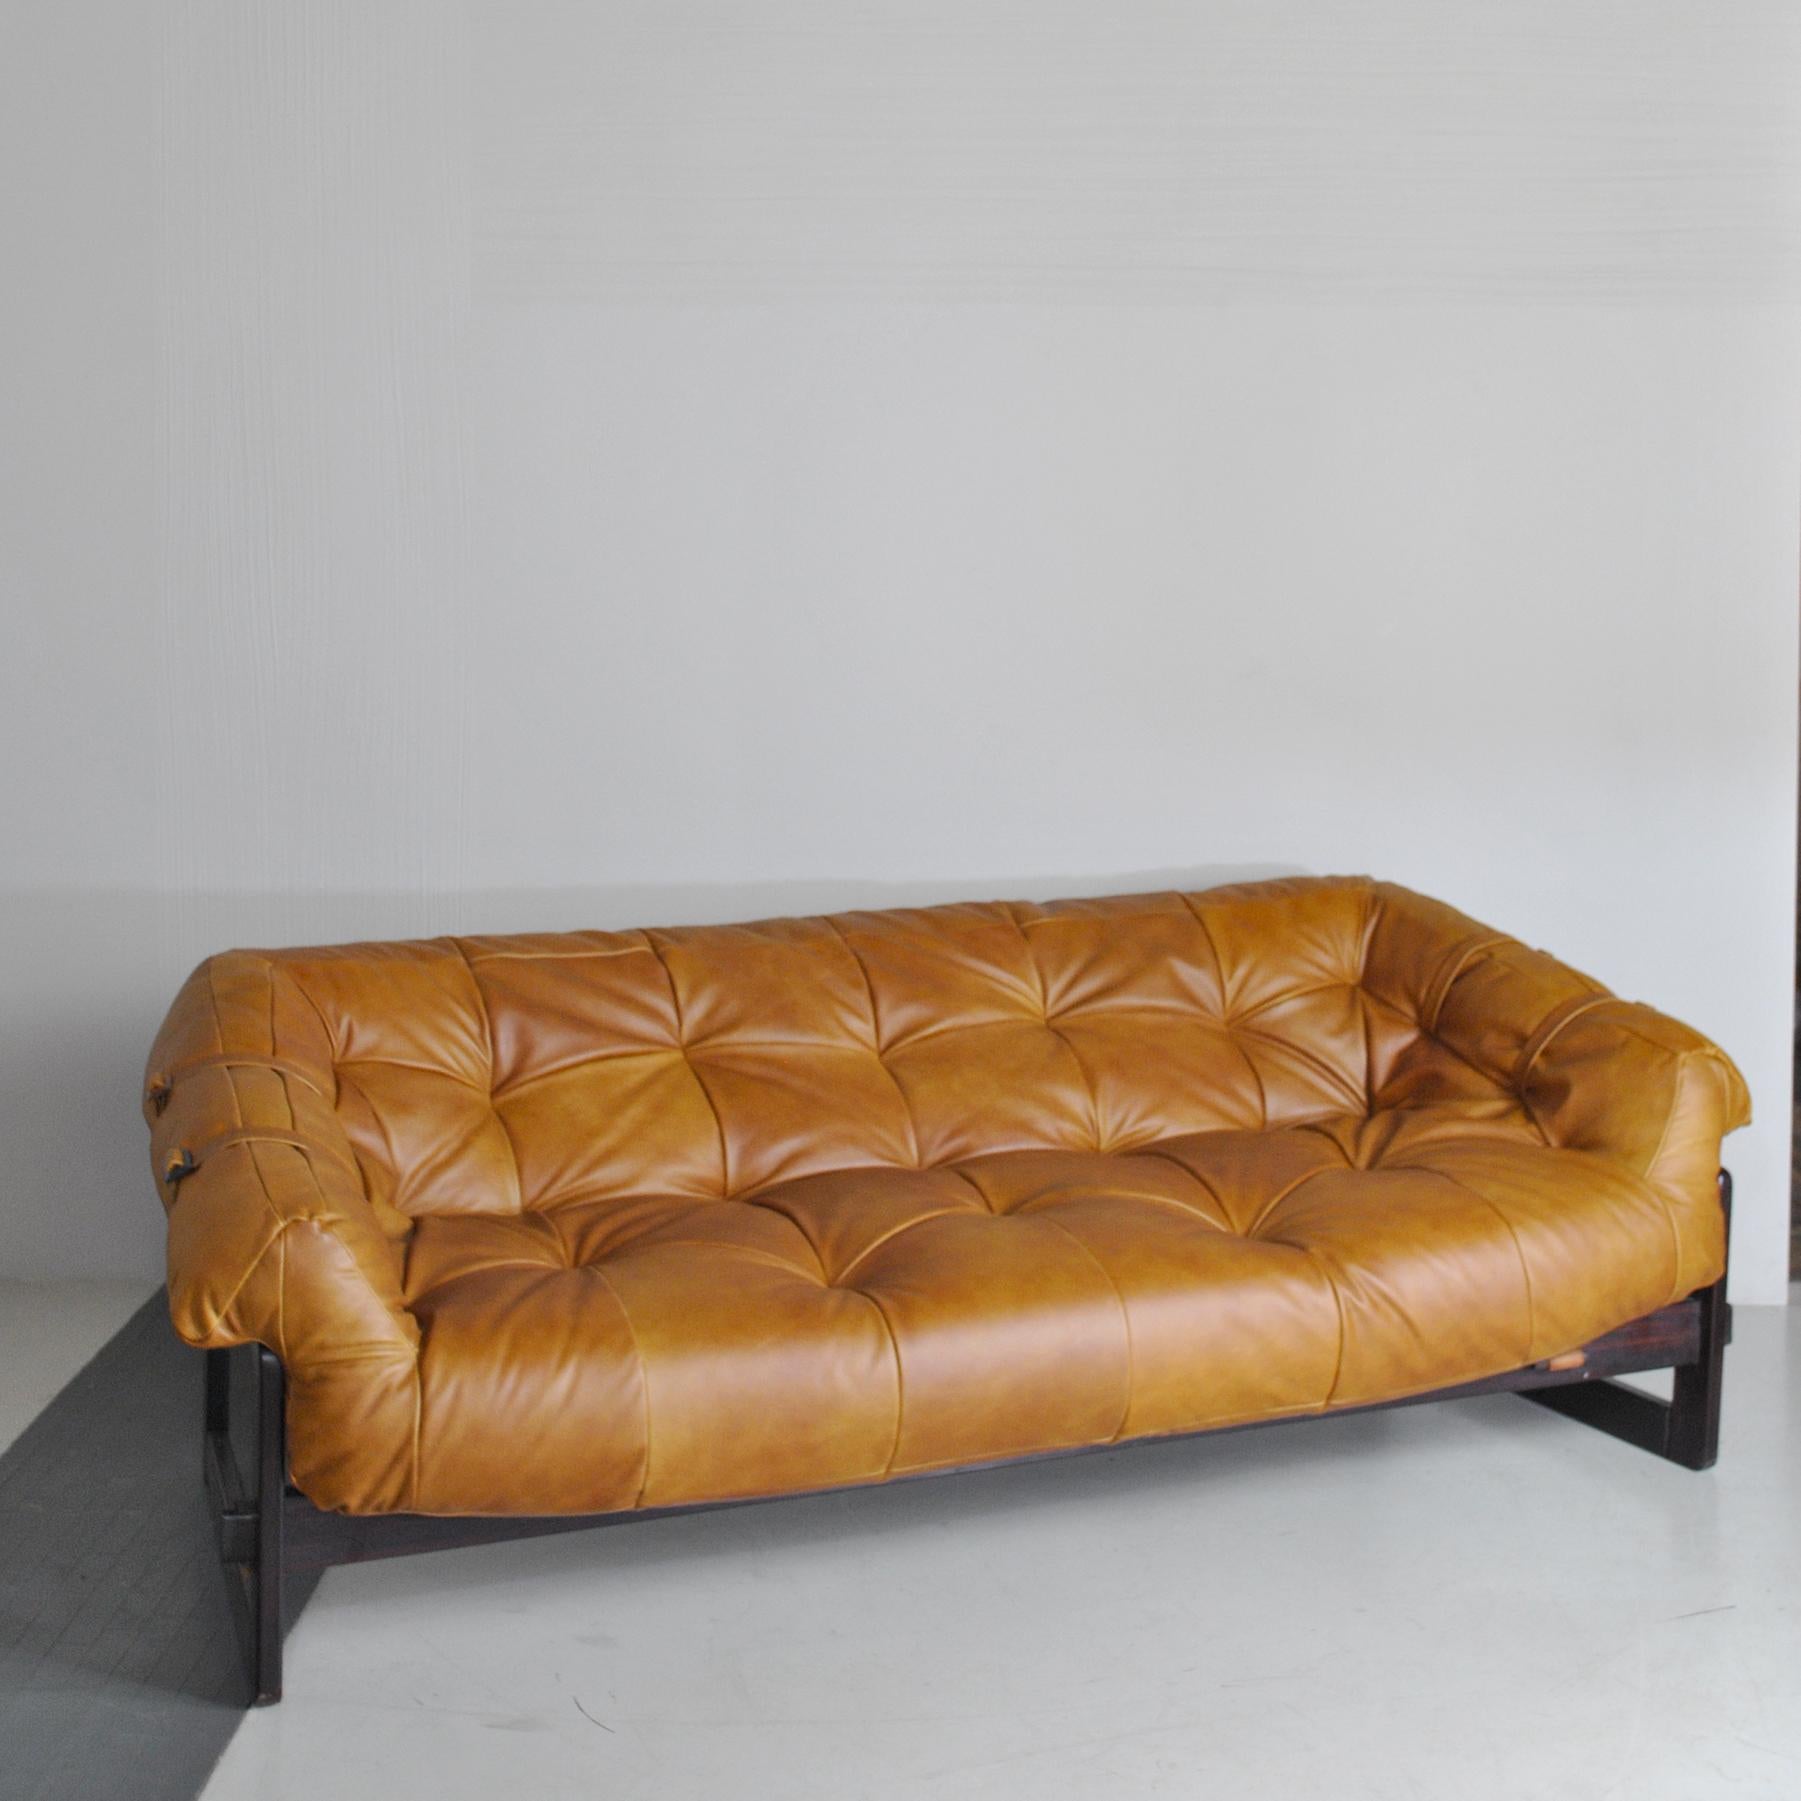 Leather Percival Lafer Midcentury Brazilian Sofa, 1960s